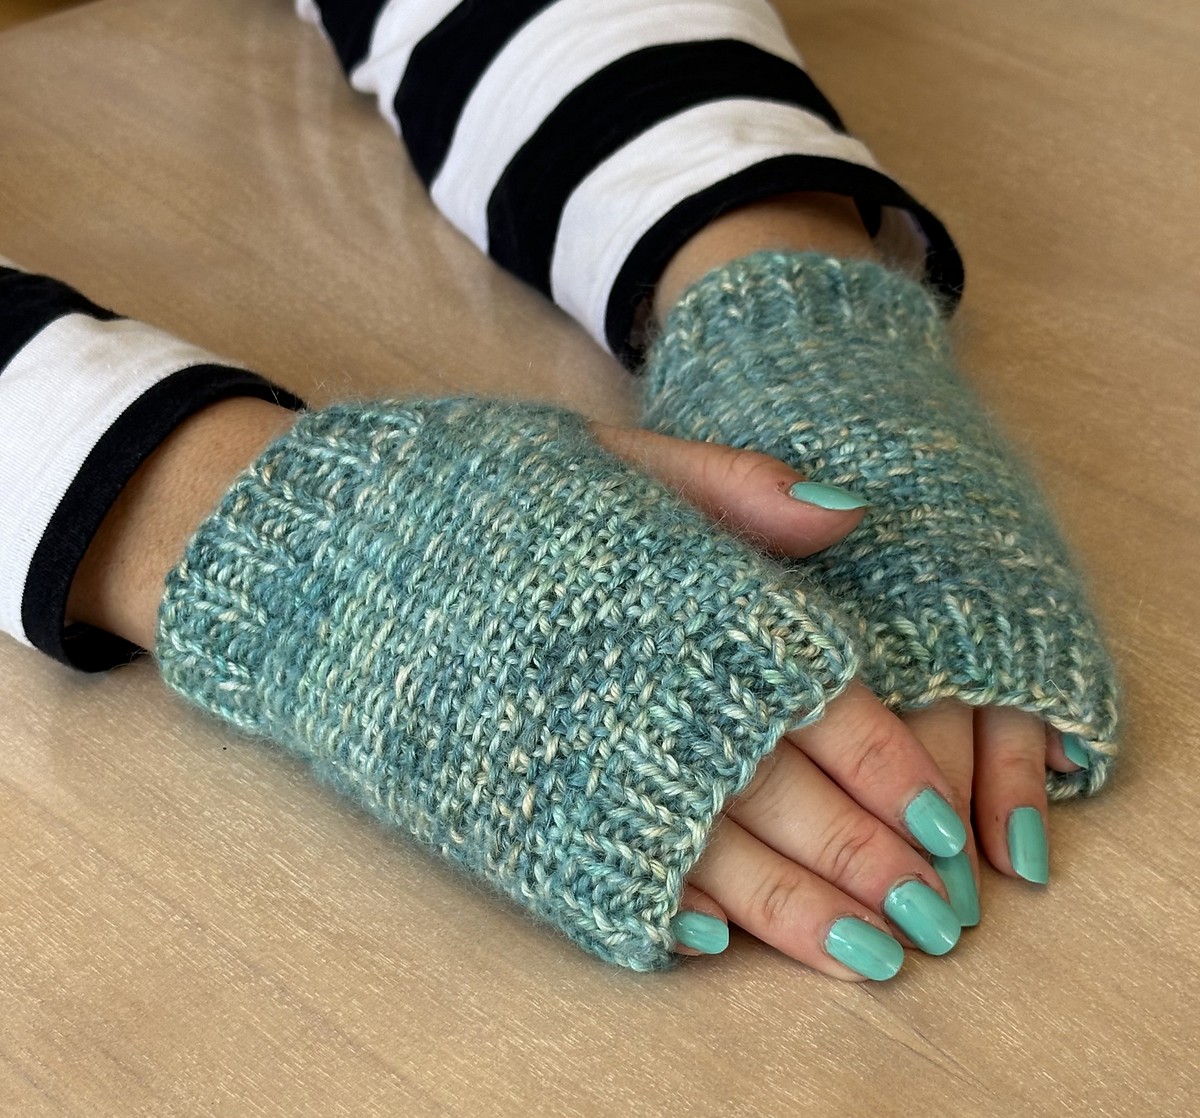 Knit Fingerless Gloves Patterns